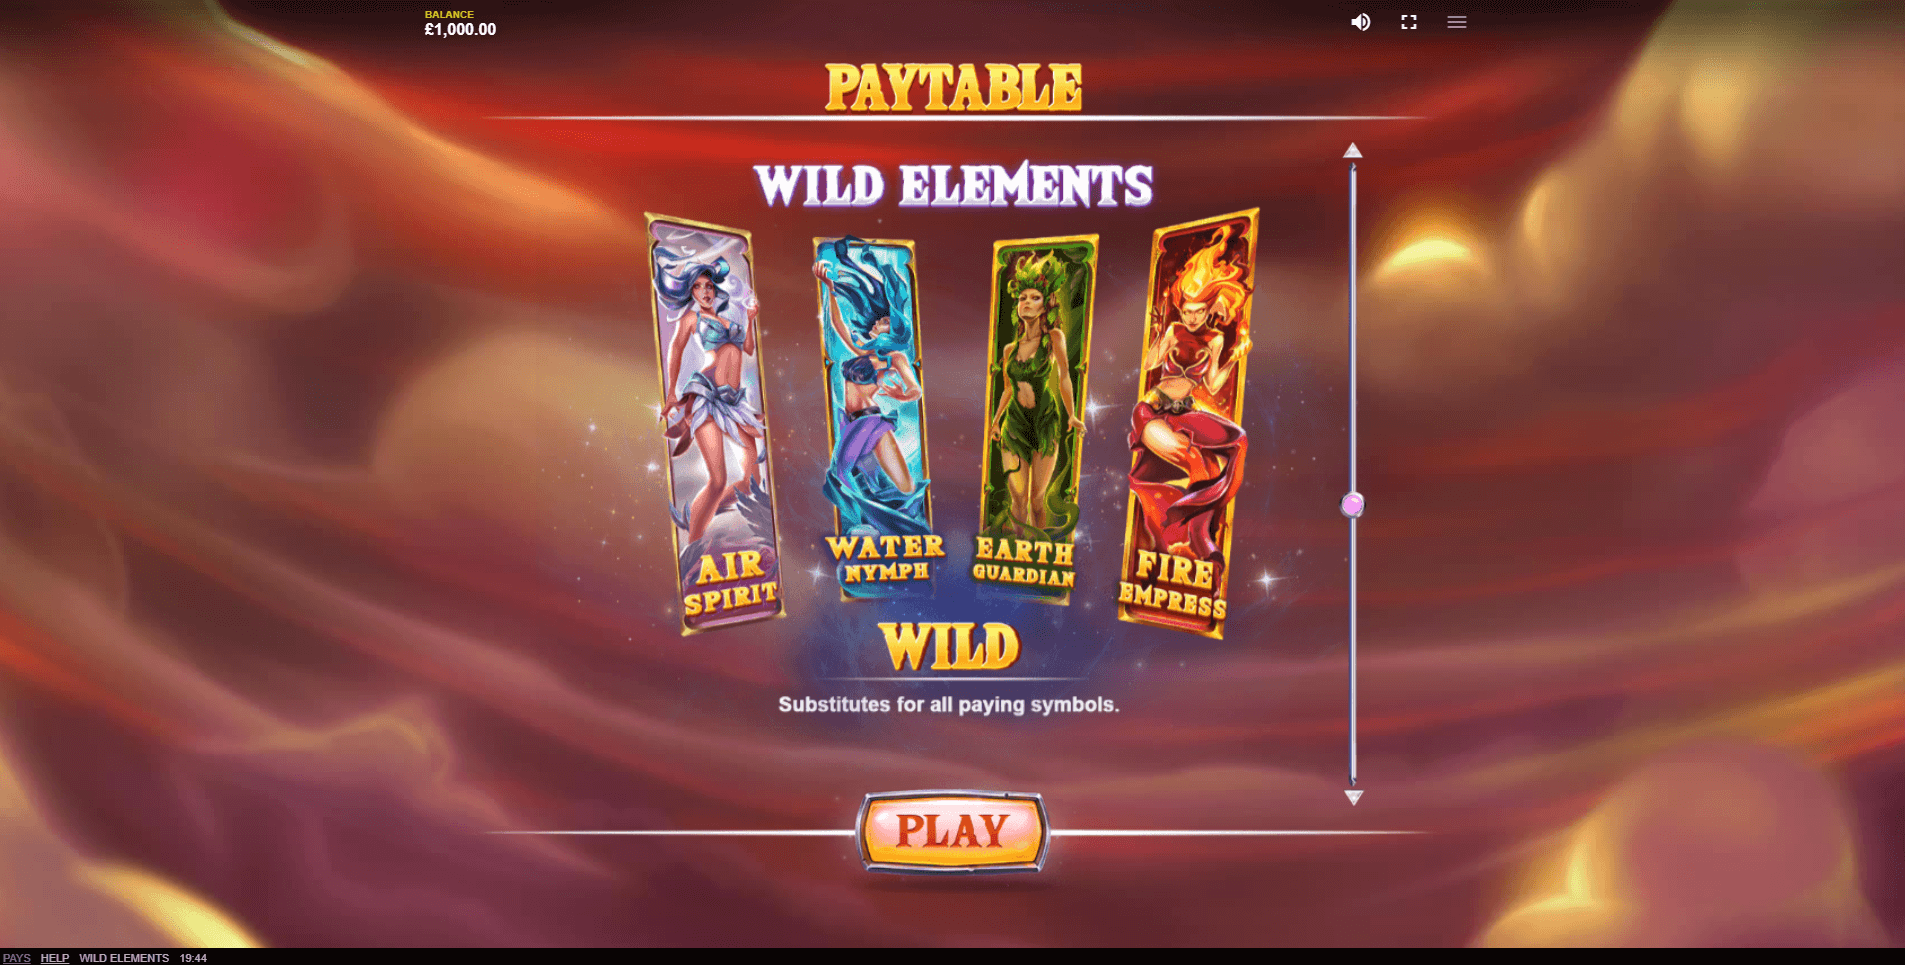 wild elements slot machine detail image 3